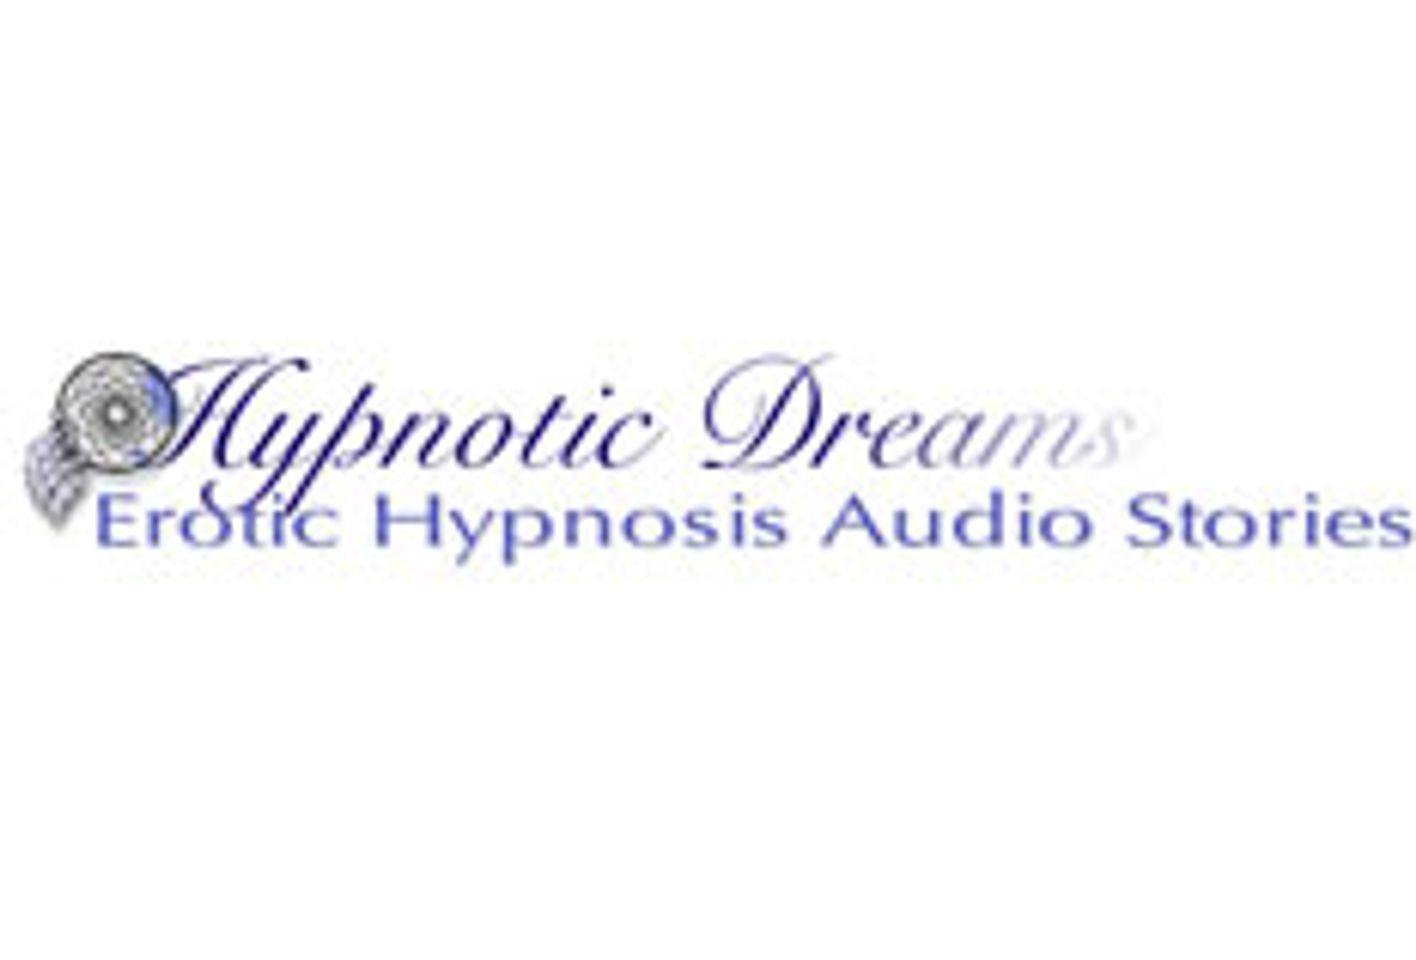 Hypnotic Dreams Nominated for ‘O’ Award